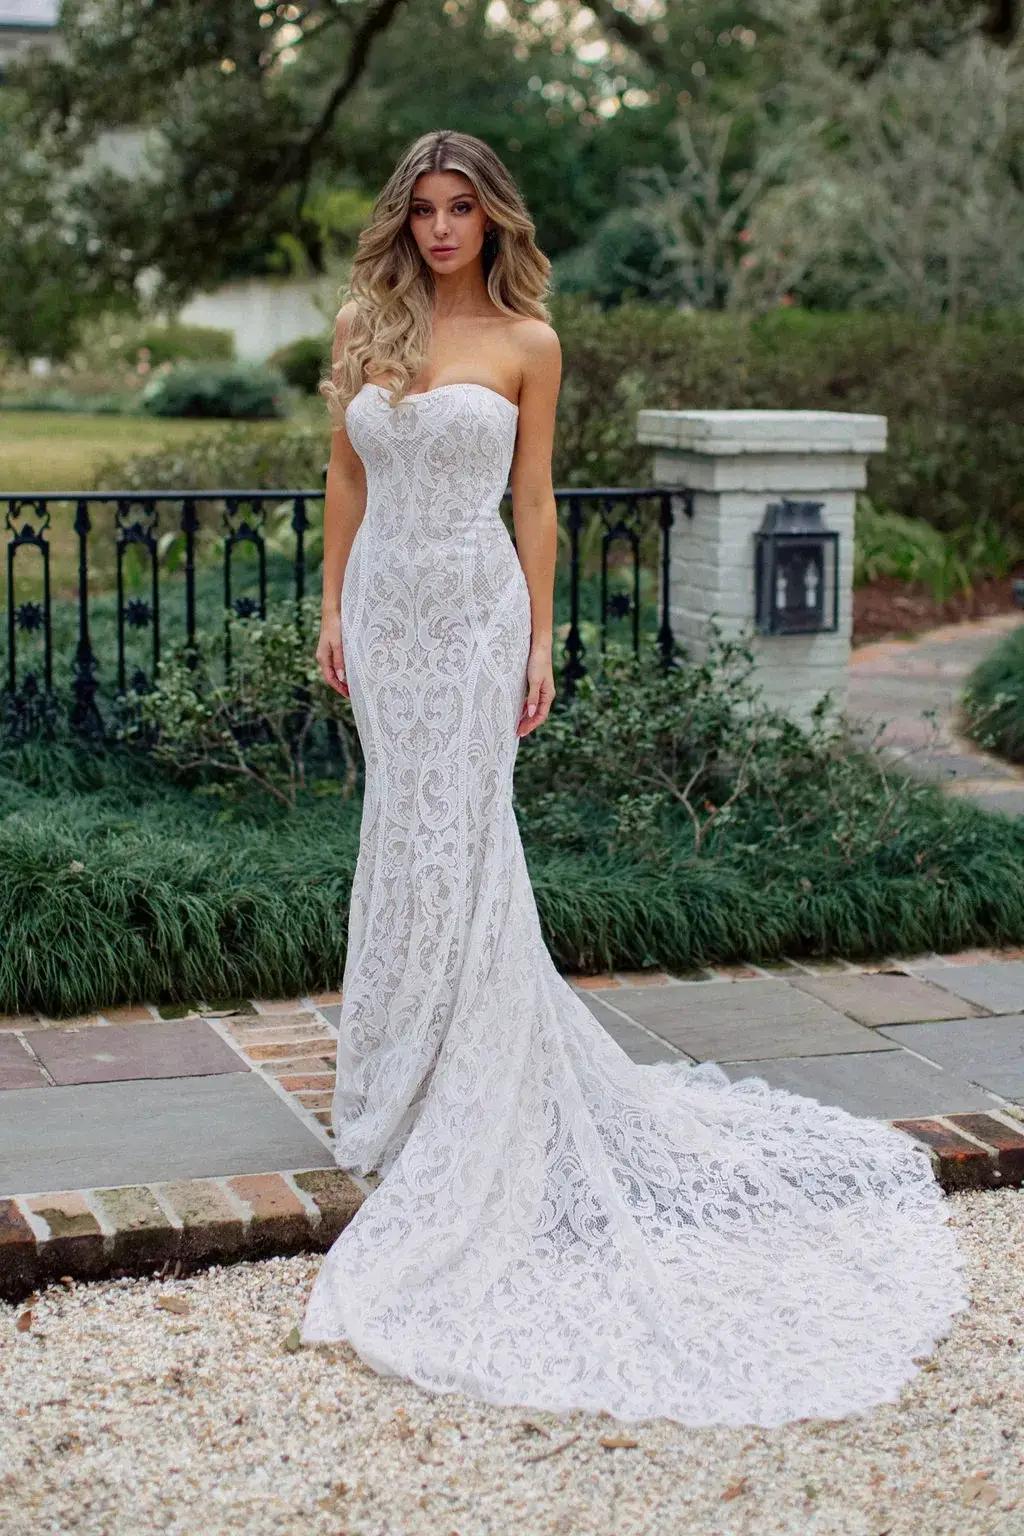 Model wearing a gown by Wilderly Bride